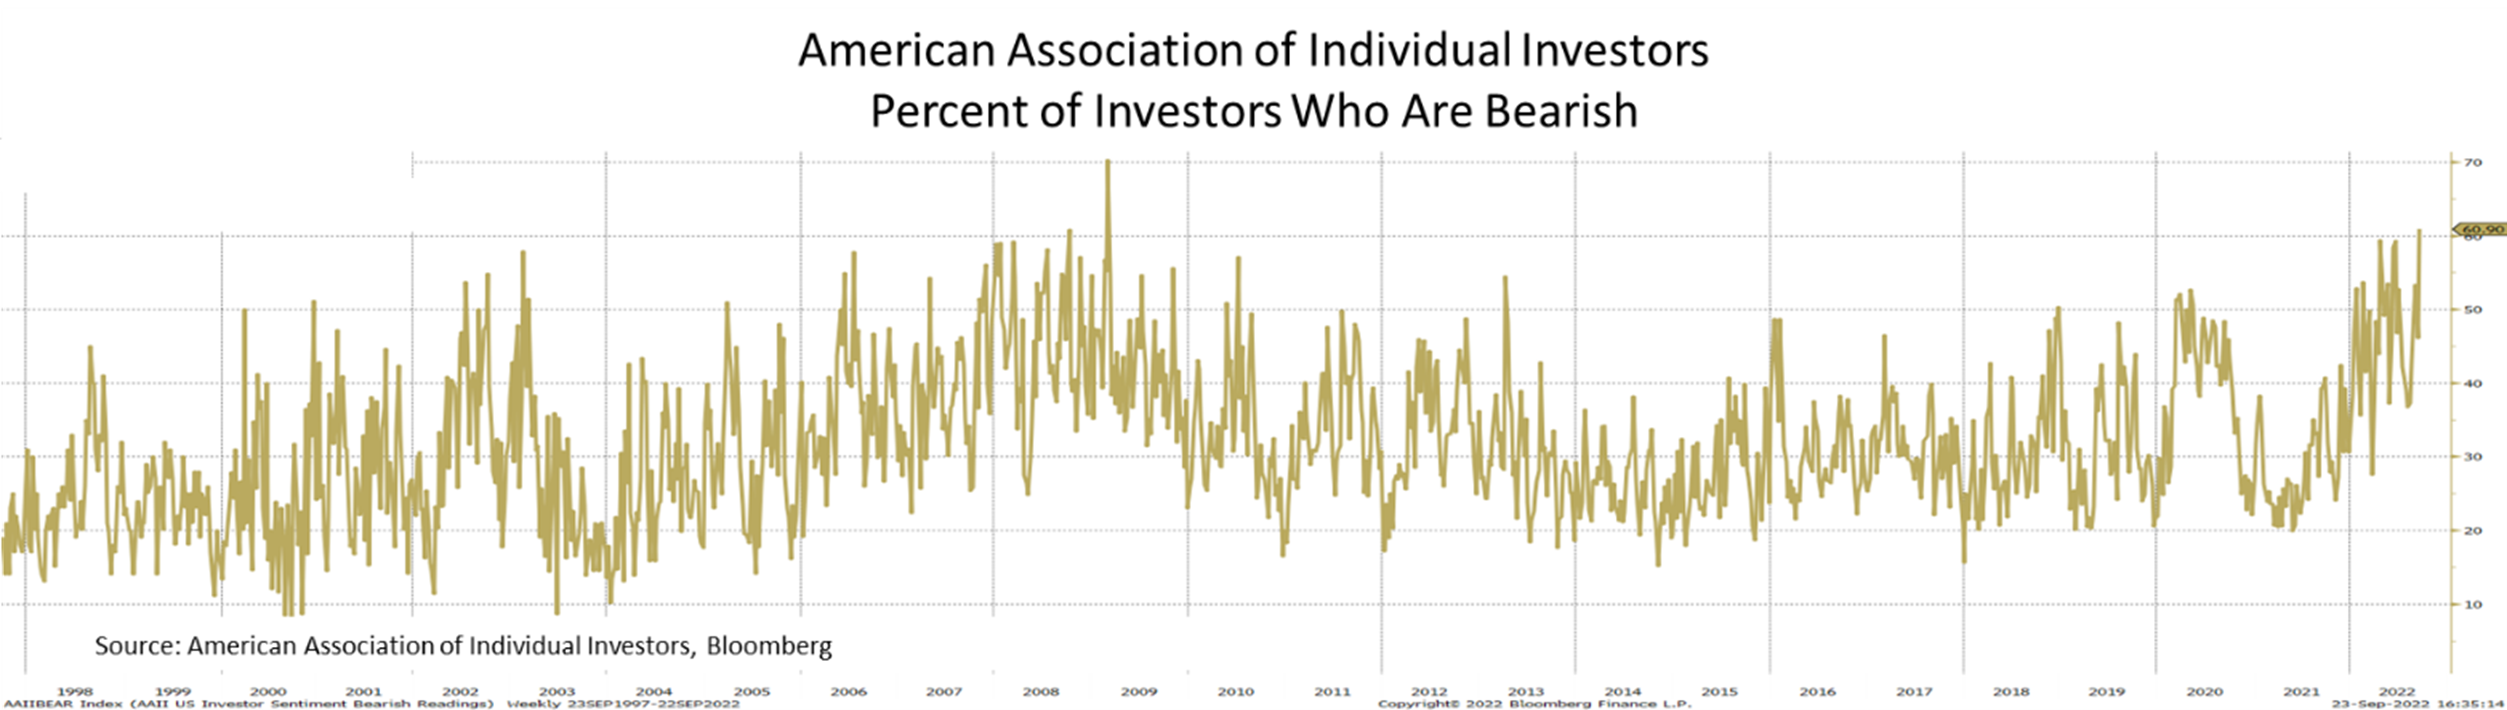 American Association of Individual Investors Percent of Investors Who Are Bearish